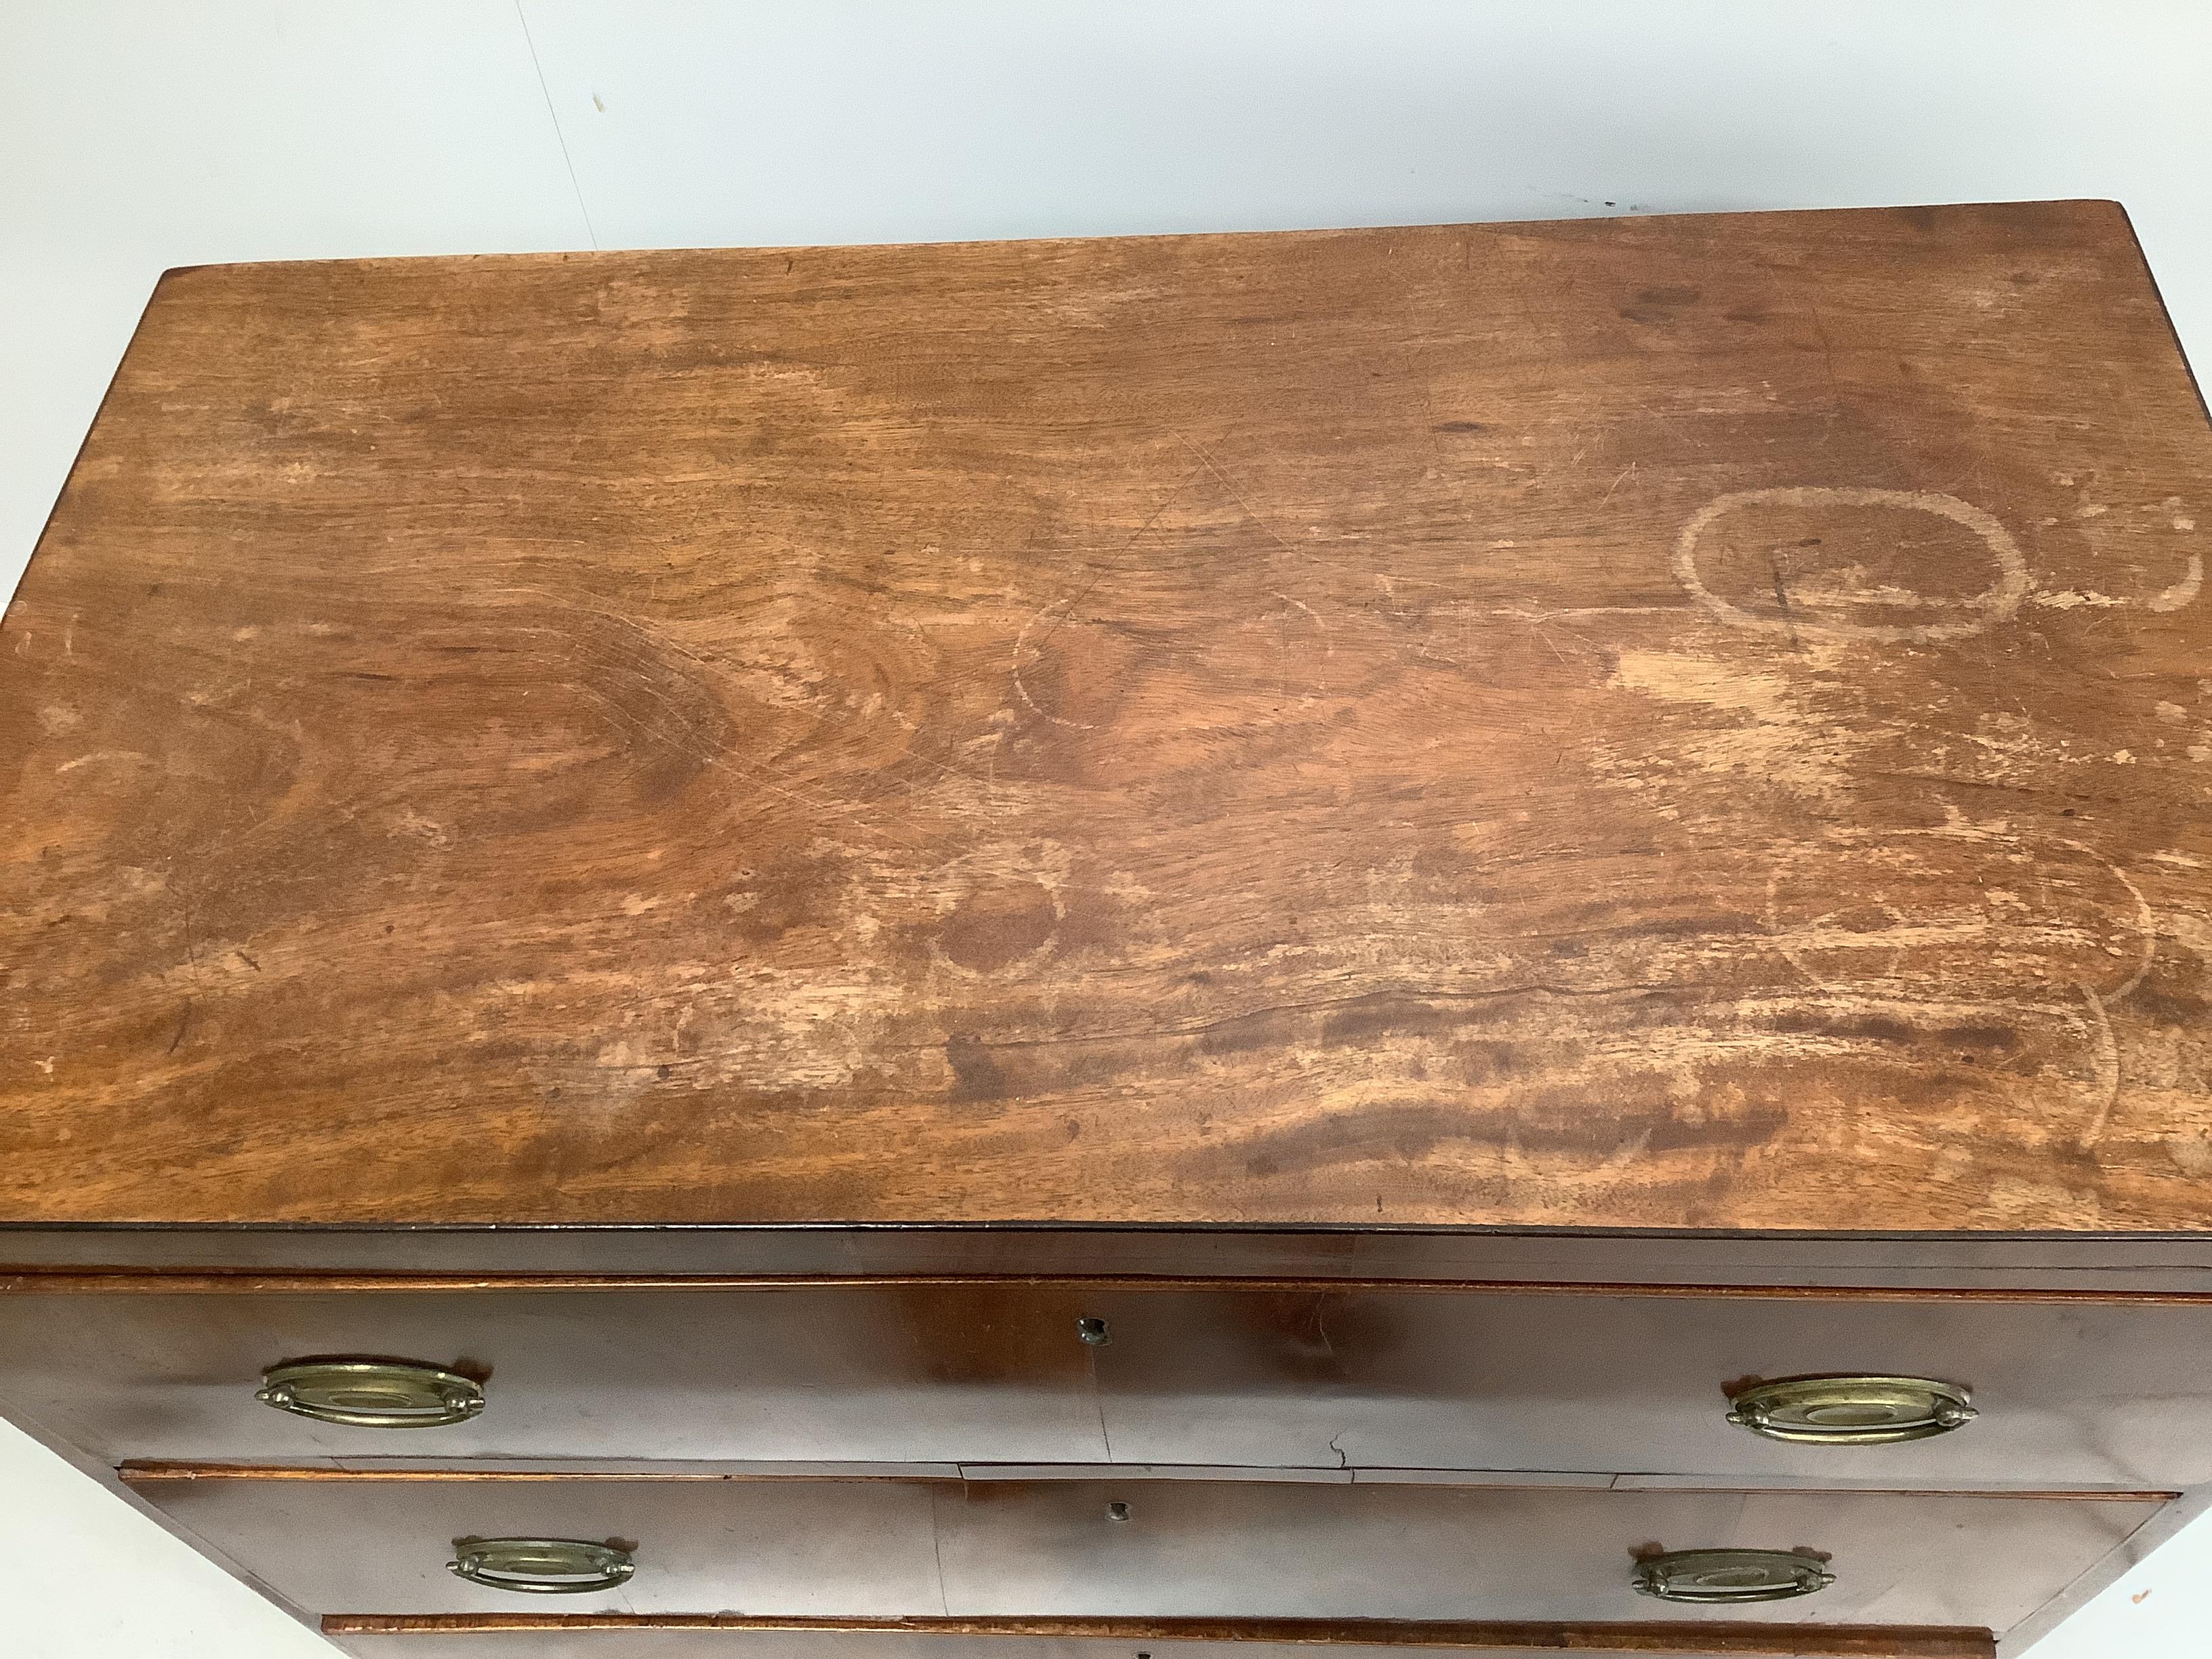 A small Regency mahogany three drawer chest, width 82cm, depth 45cm, height 85cm